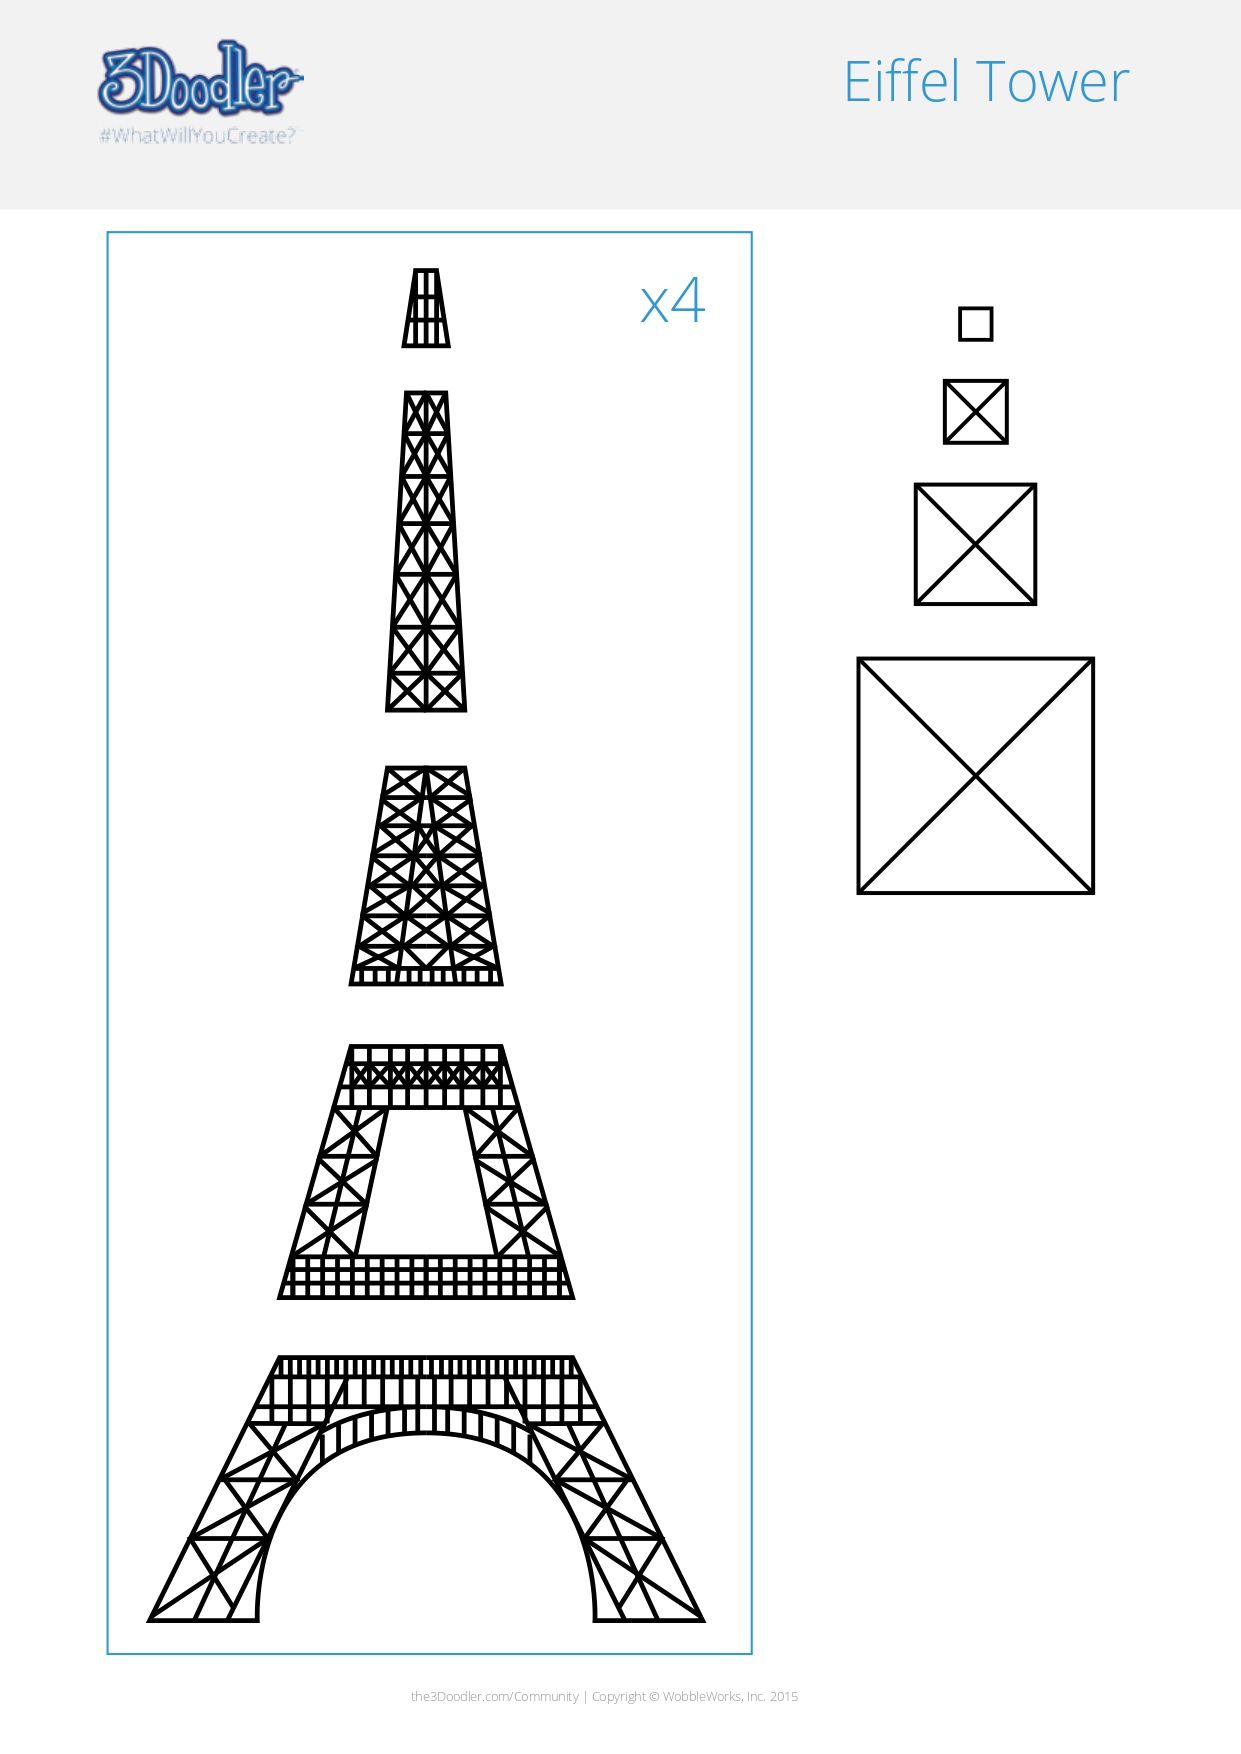 Eiffel Tower 3D Pen Creation Library